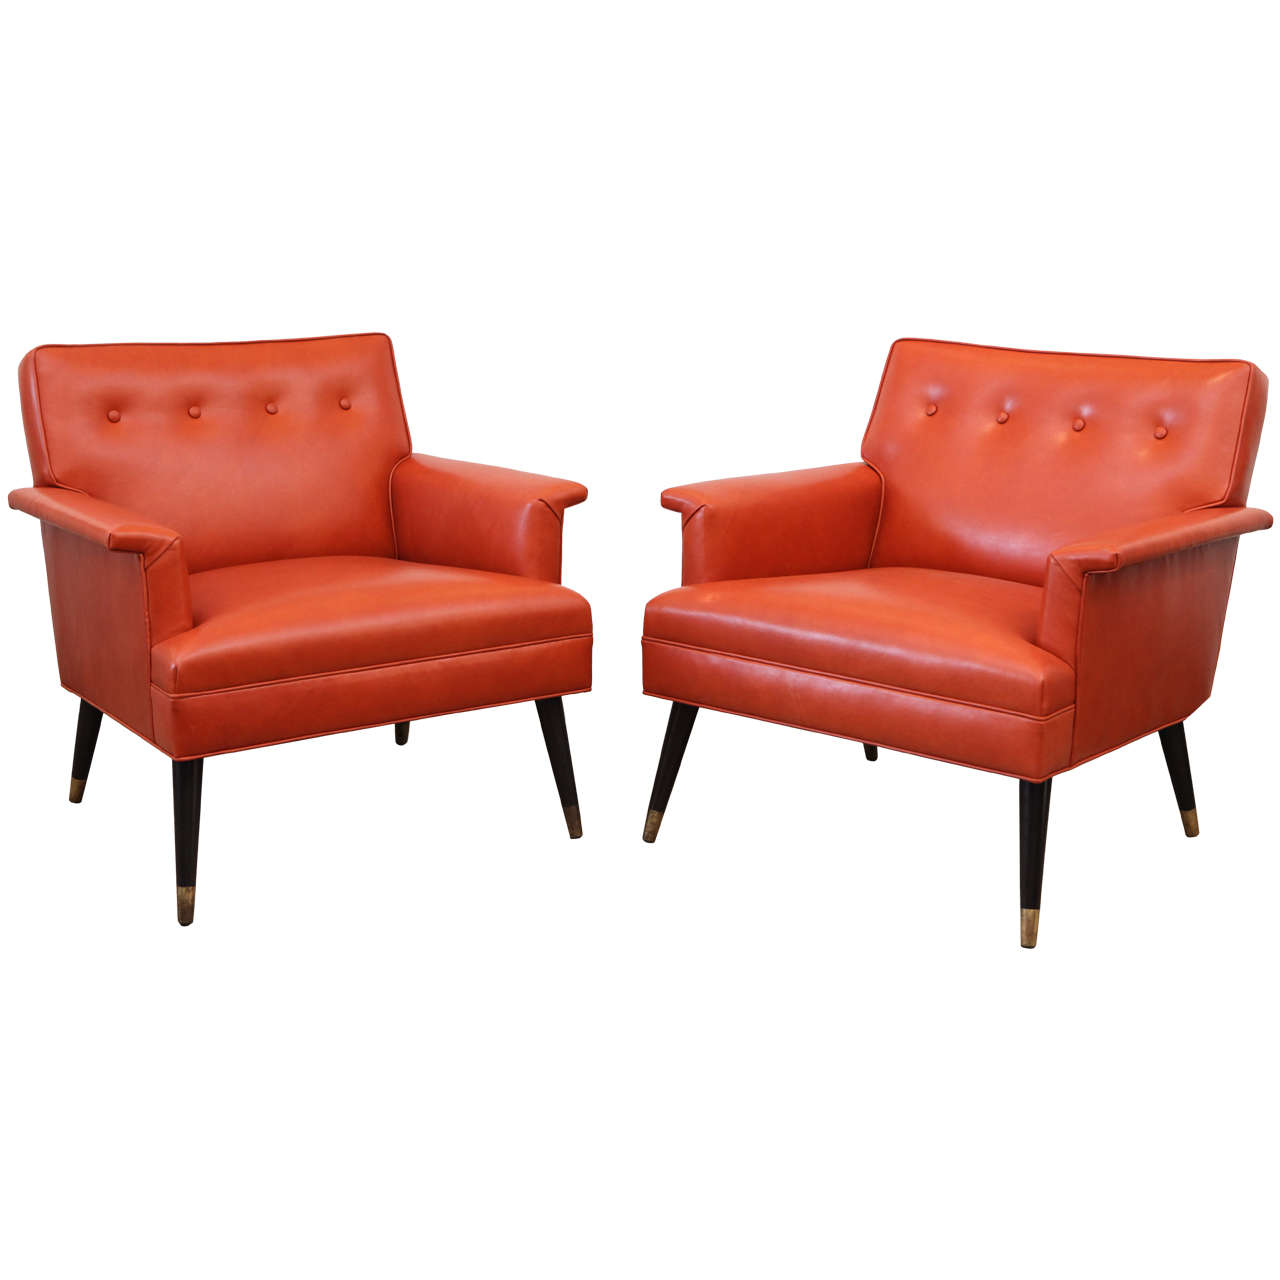 Pair of orange Leather Mid-Century Armchairs